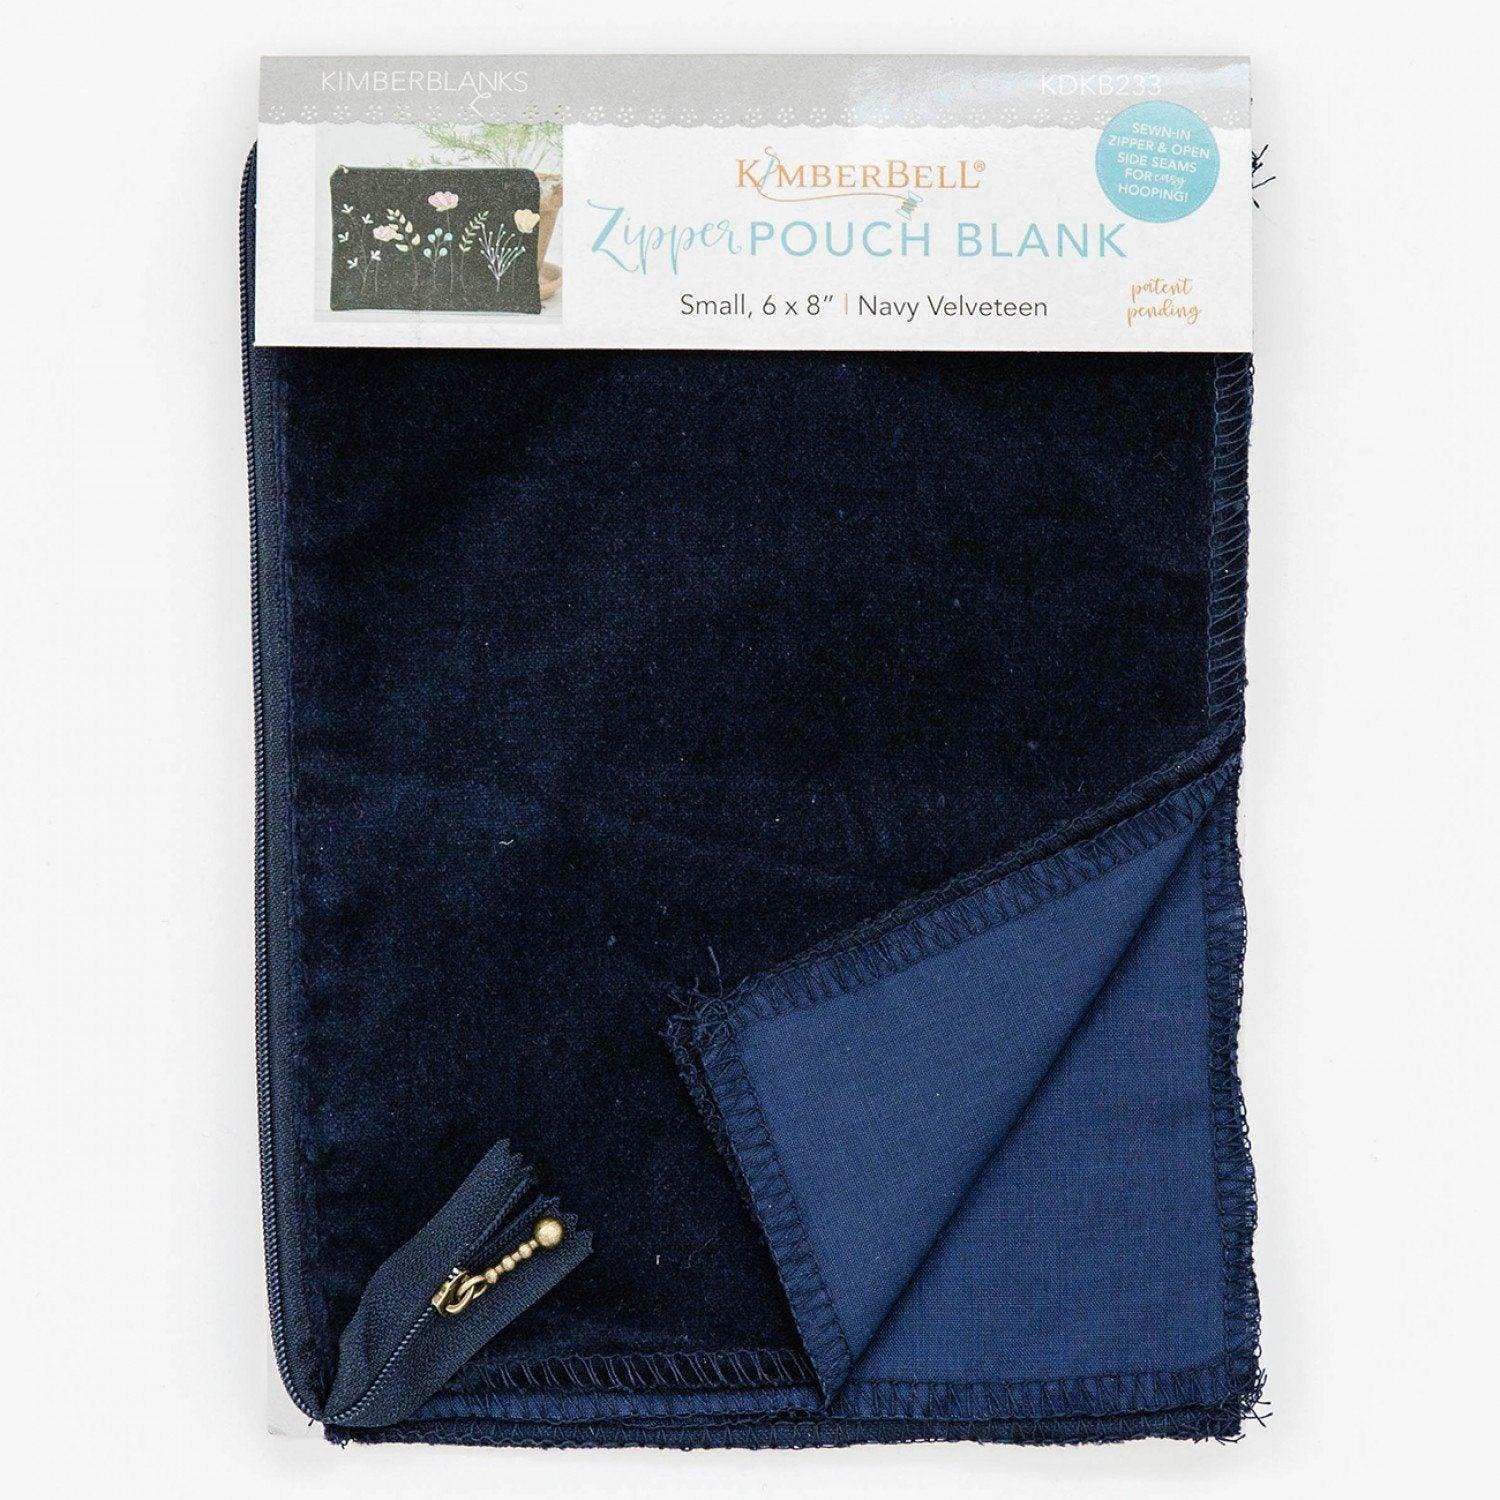 Zipper Pouch Blank - Navy - Velveteen - Small (6" x 8") - Kimberbell - Kawartha Quilting and Sewing LTD.